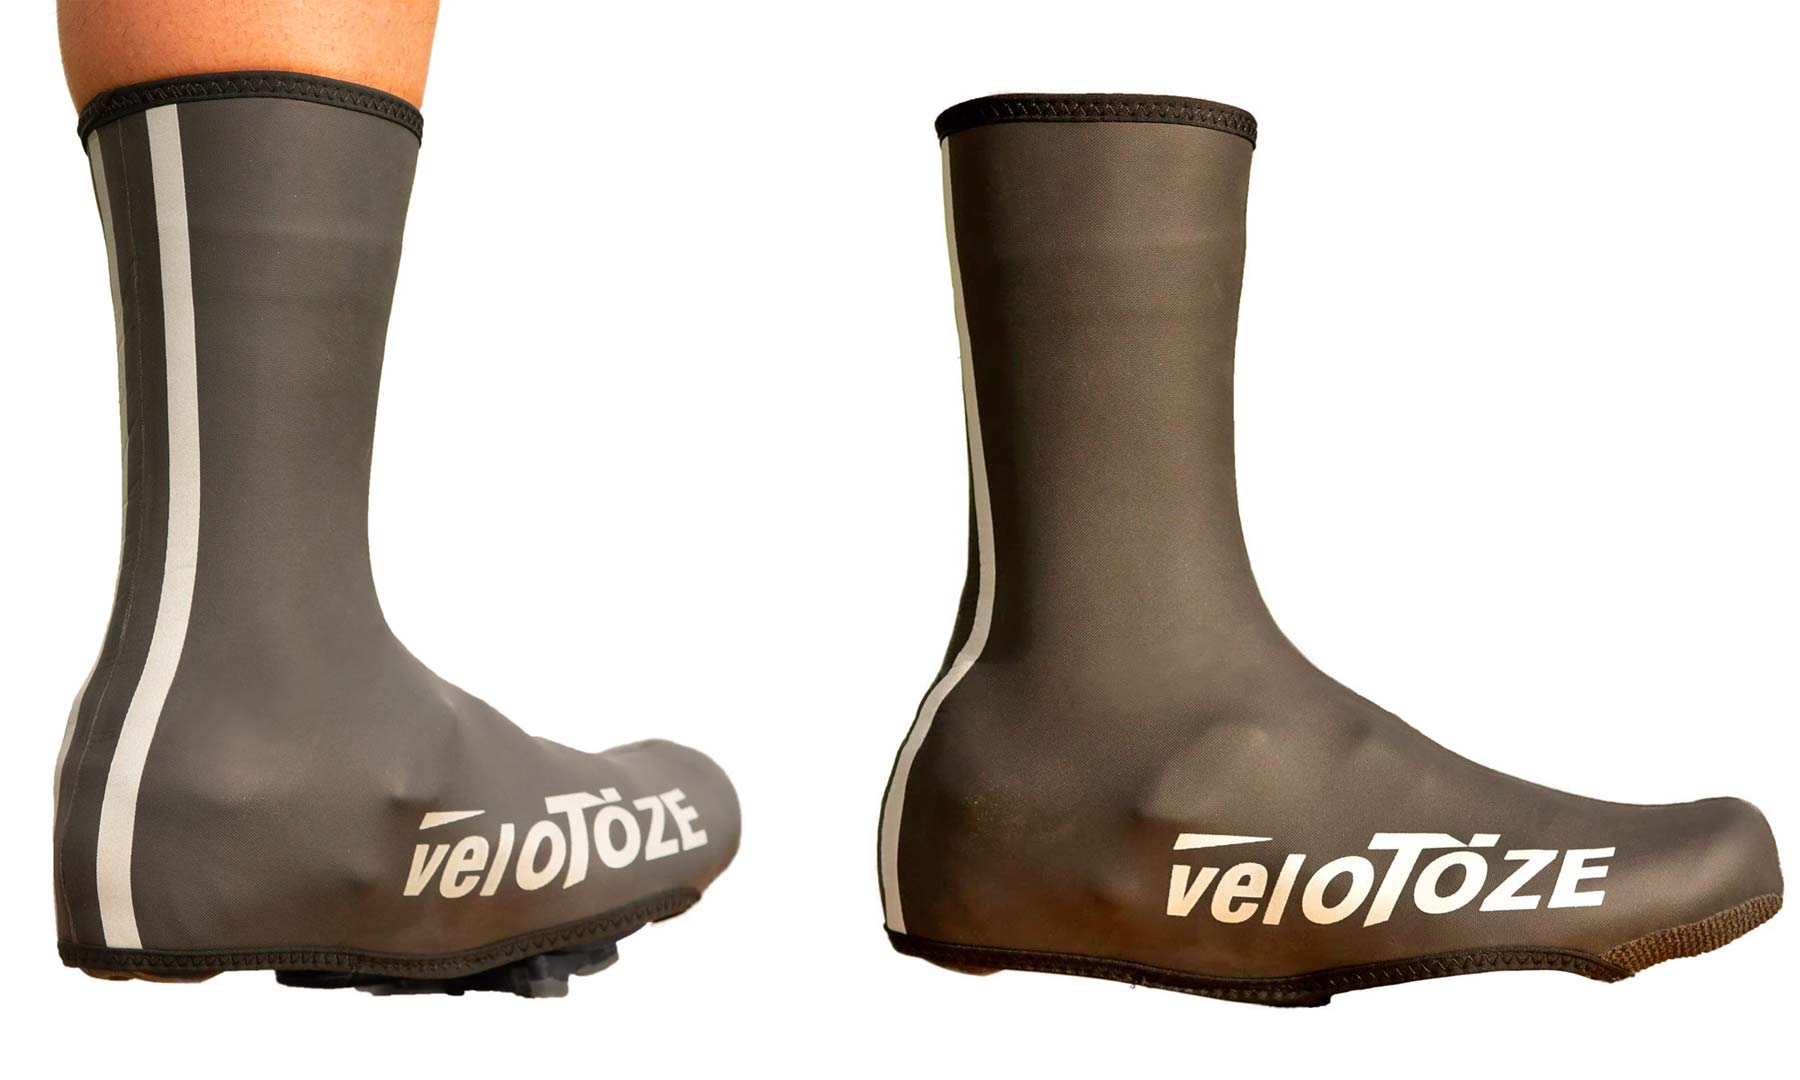 VeloToze Neoprene Shoe Cover waterproof shoe cover & cuff combo